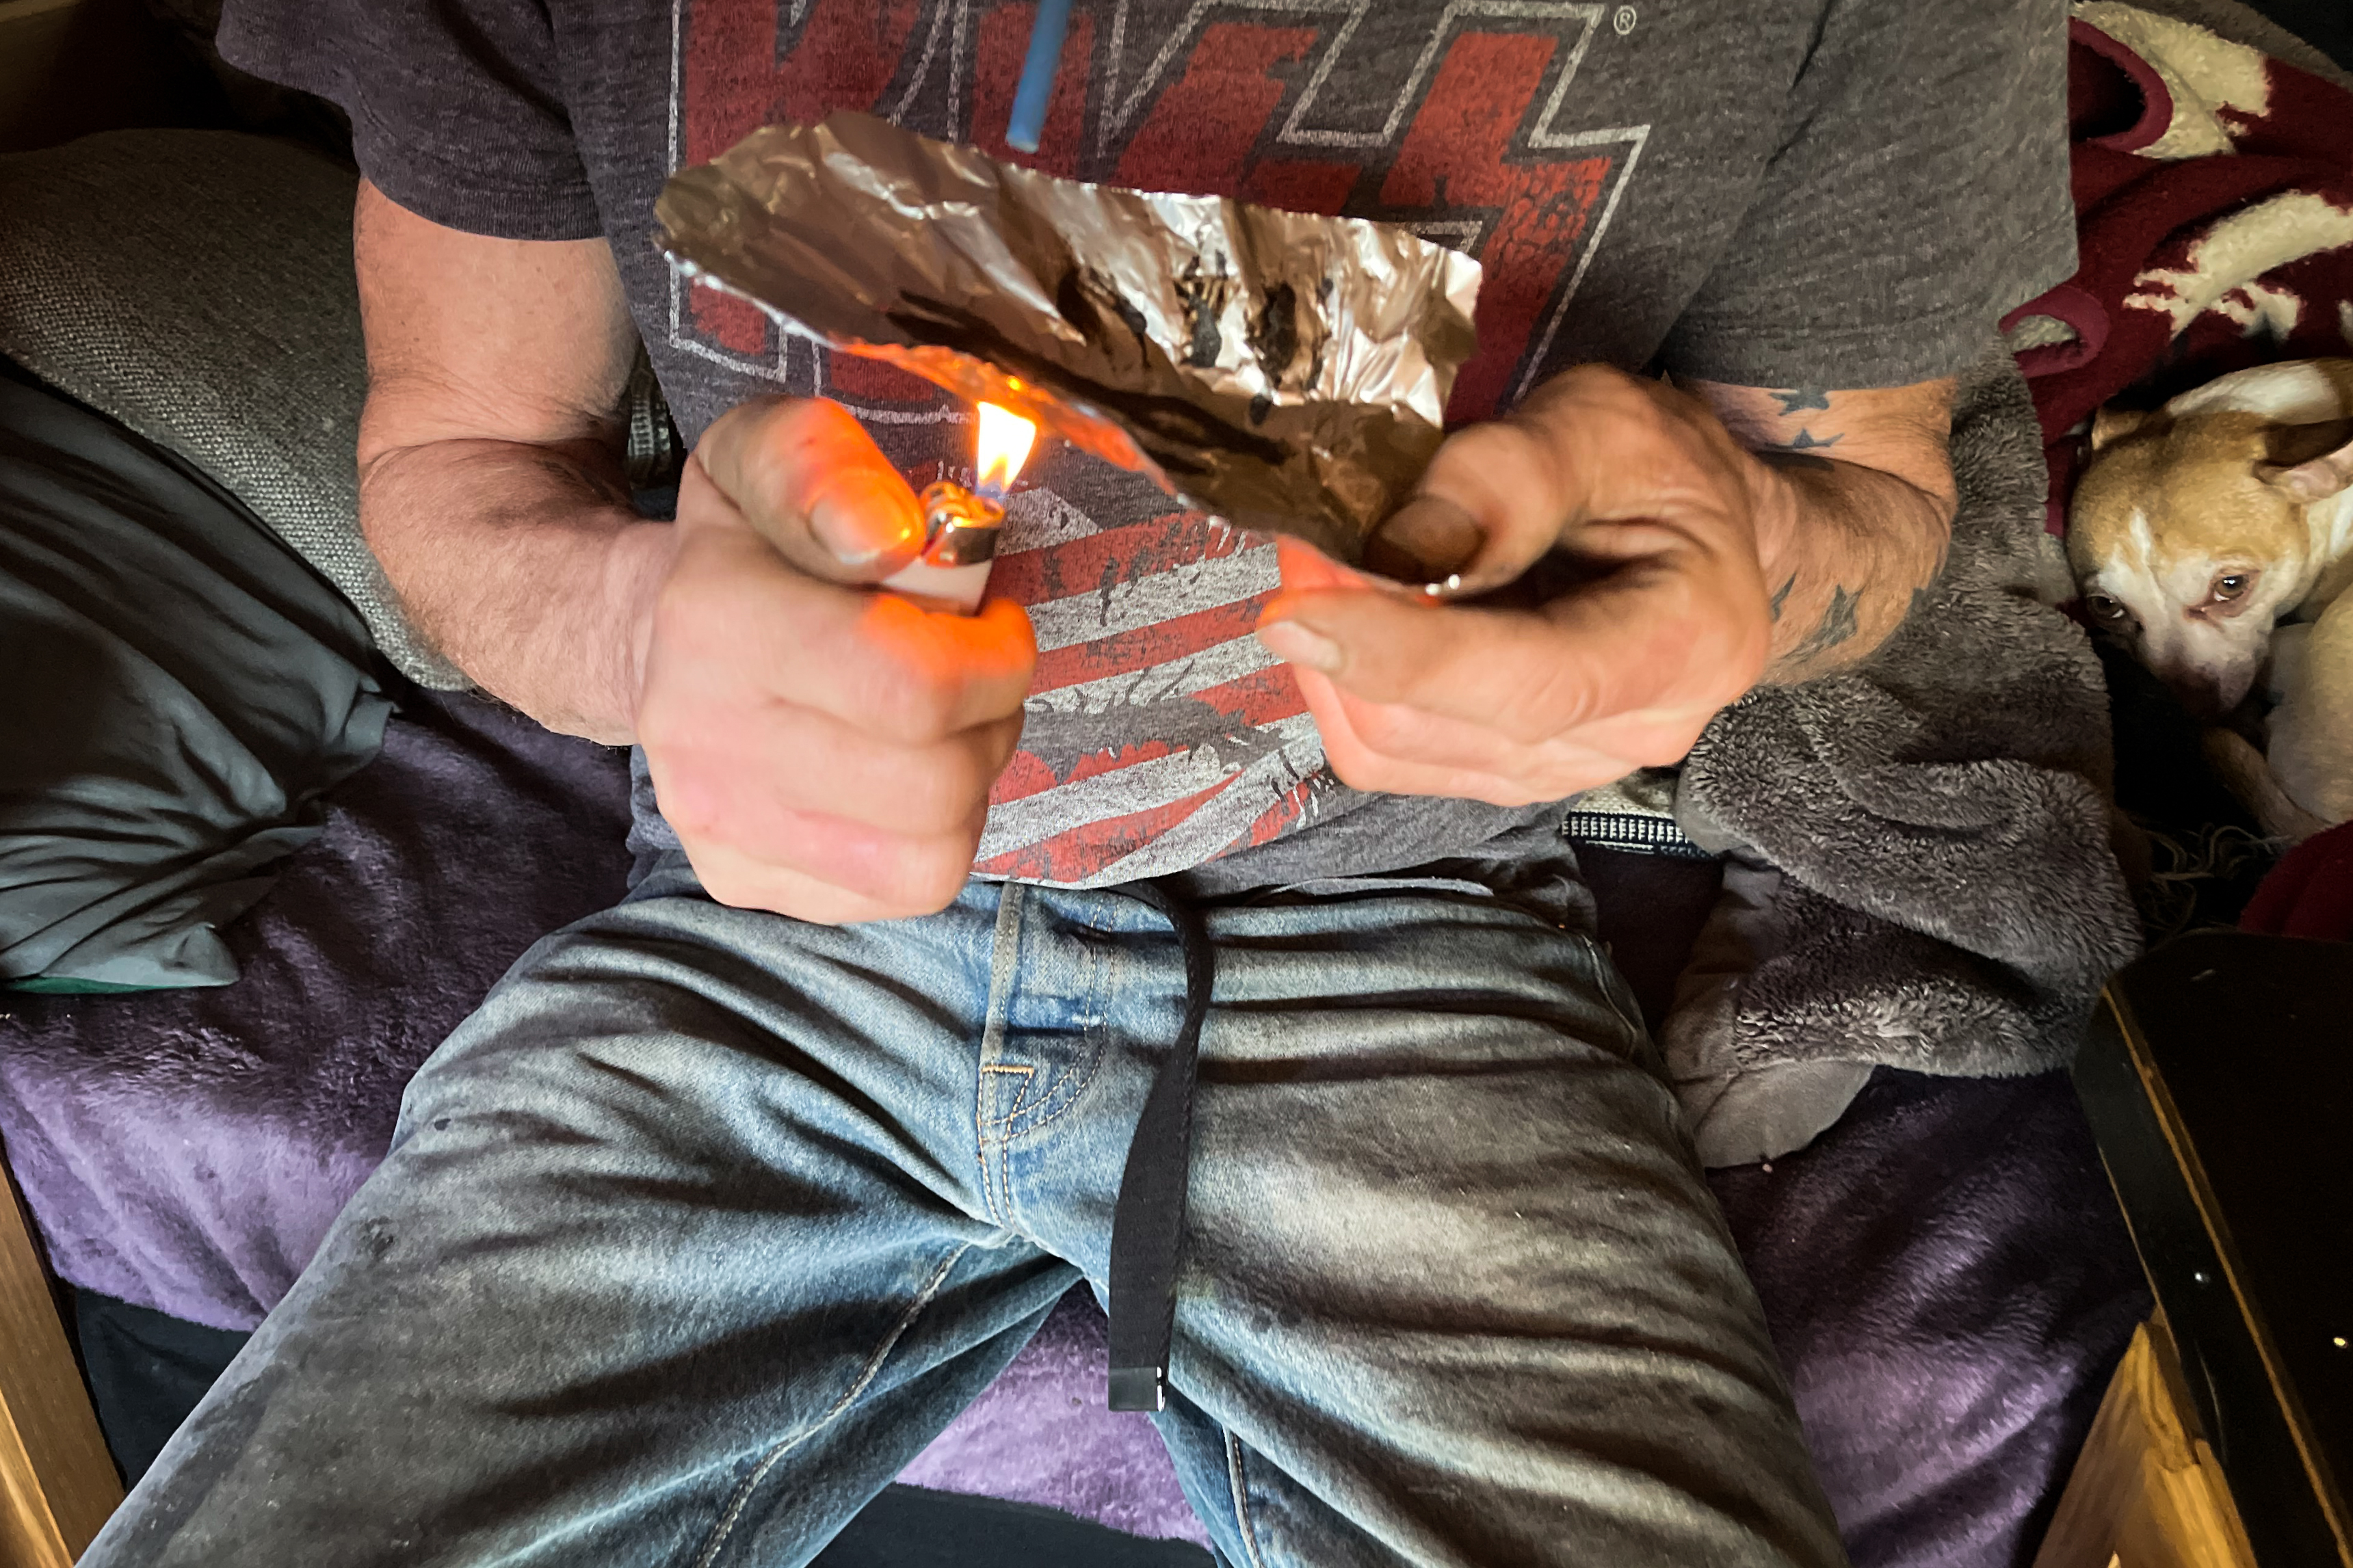 A closeup photo shows a person preparing to smoke heroin on foil. person